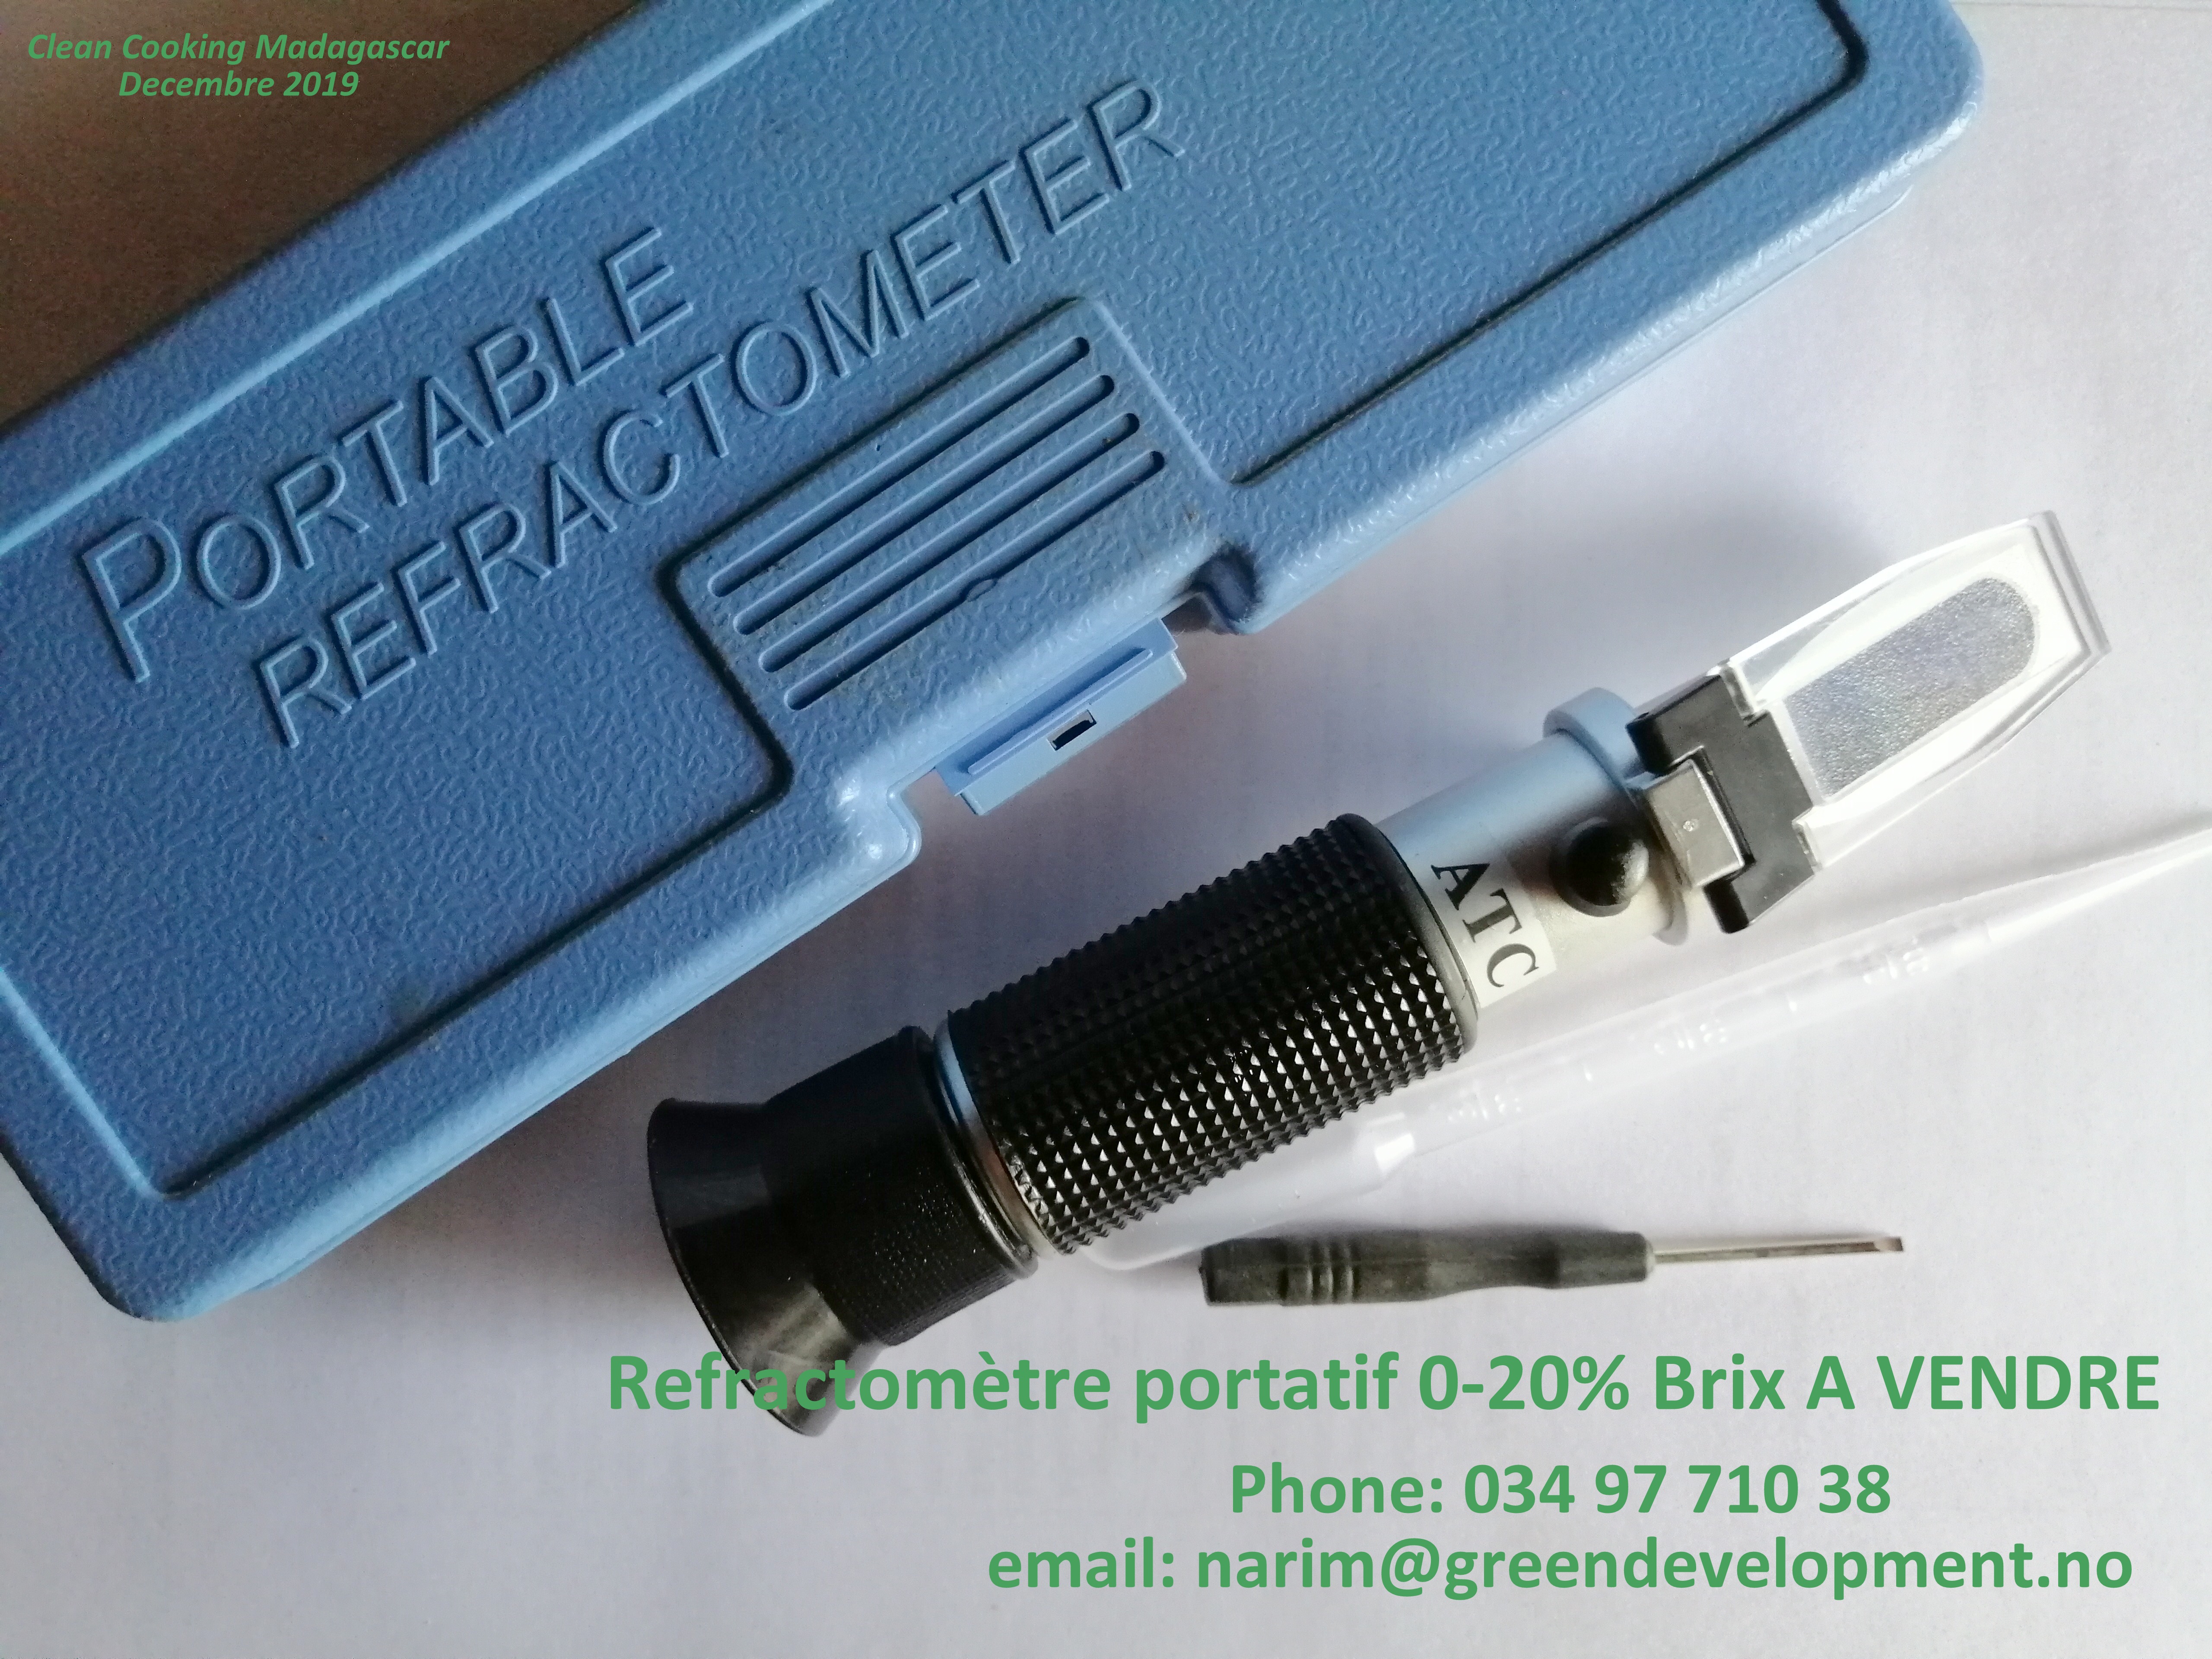 Refractometer, 0-20% Brix for sale